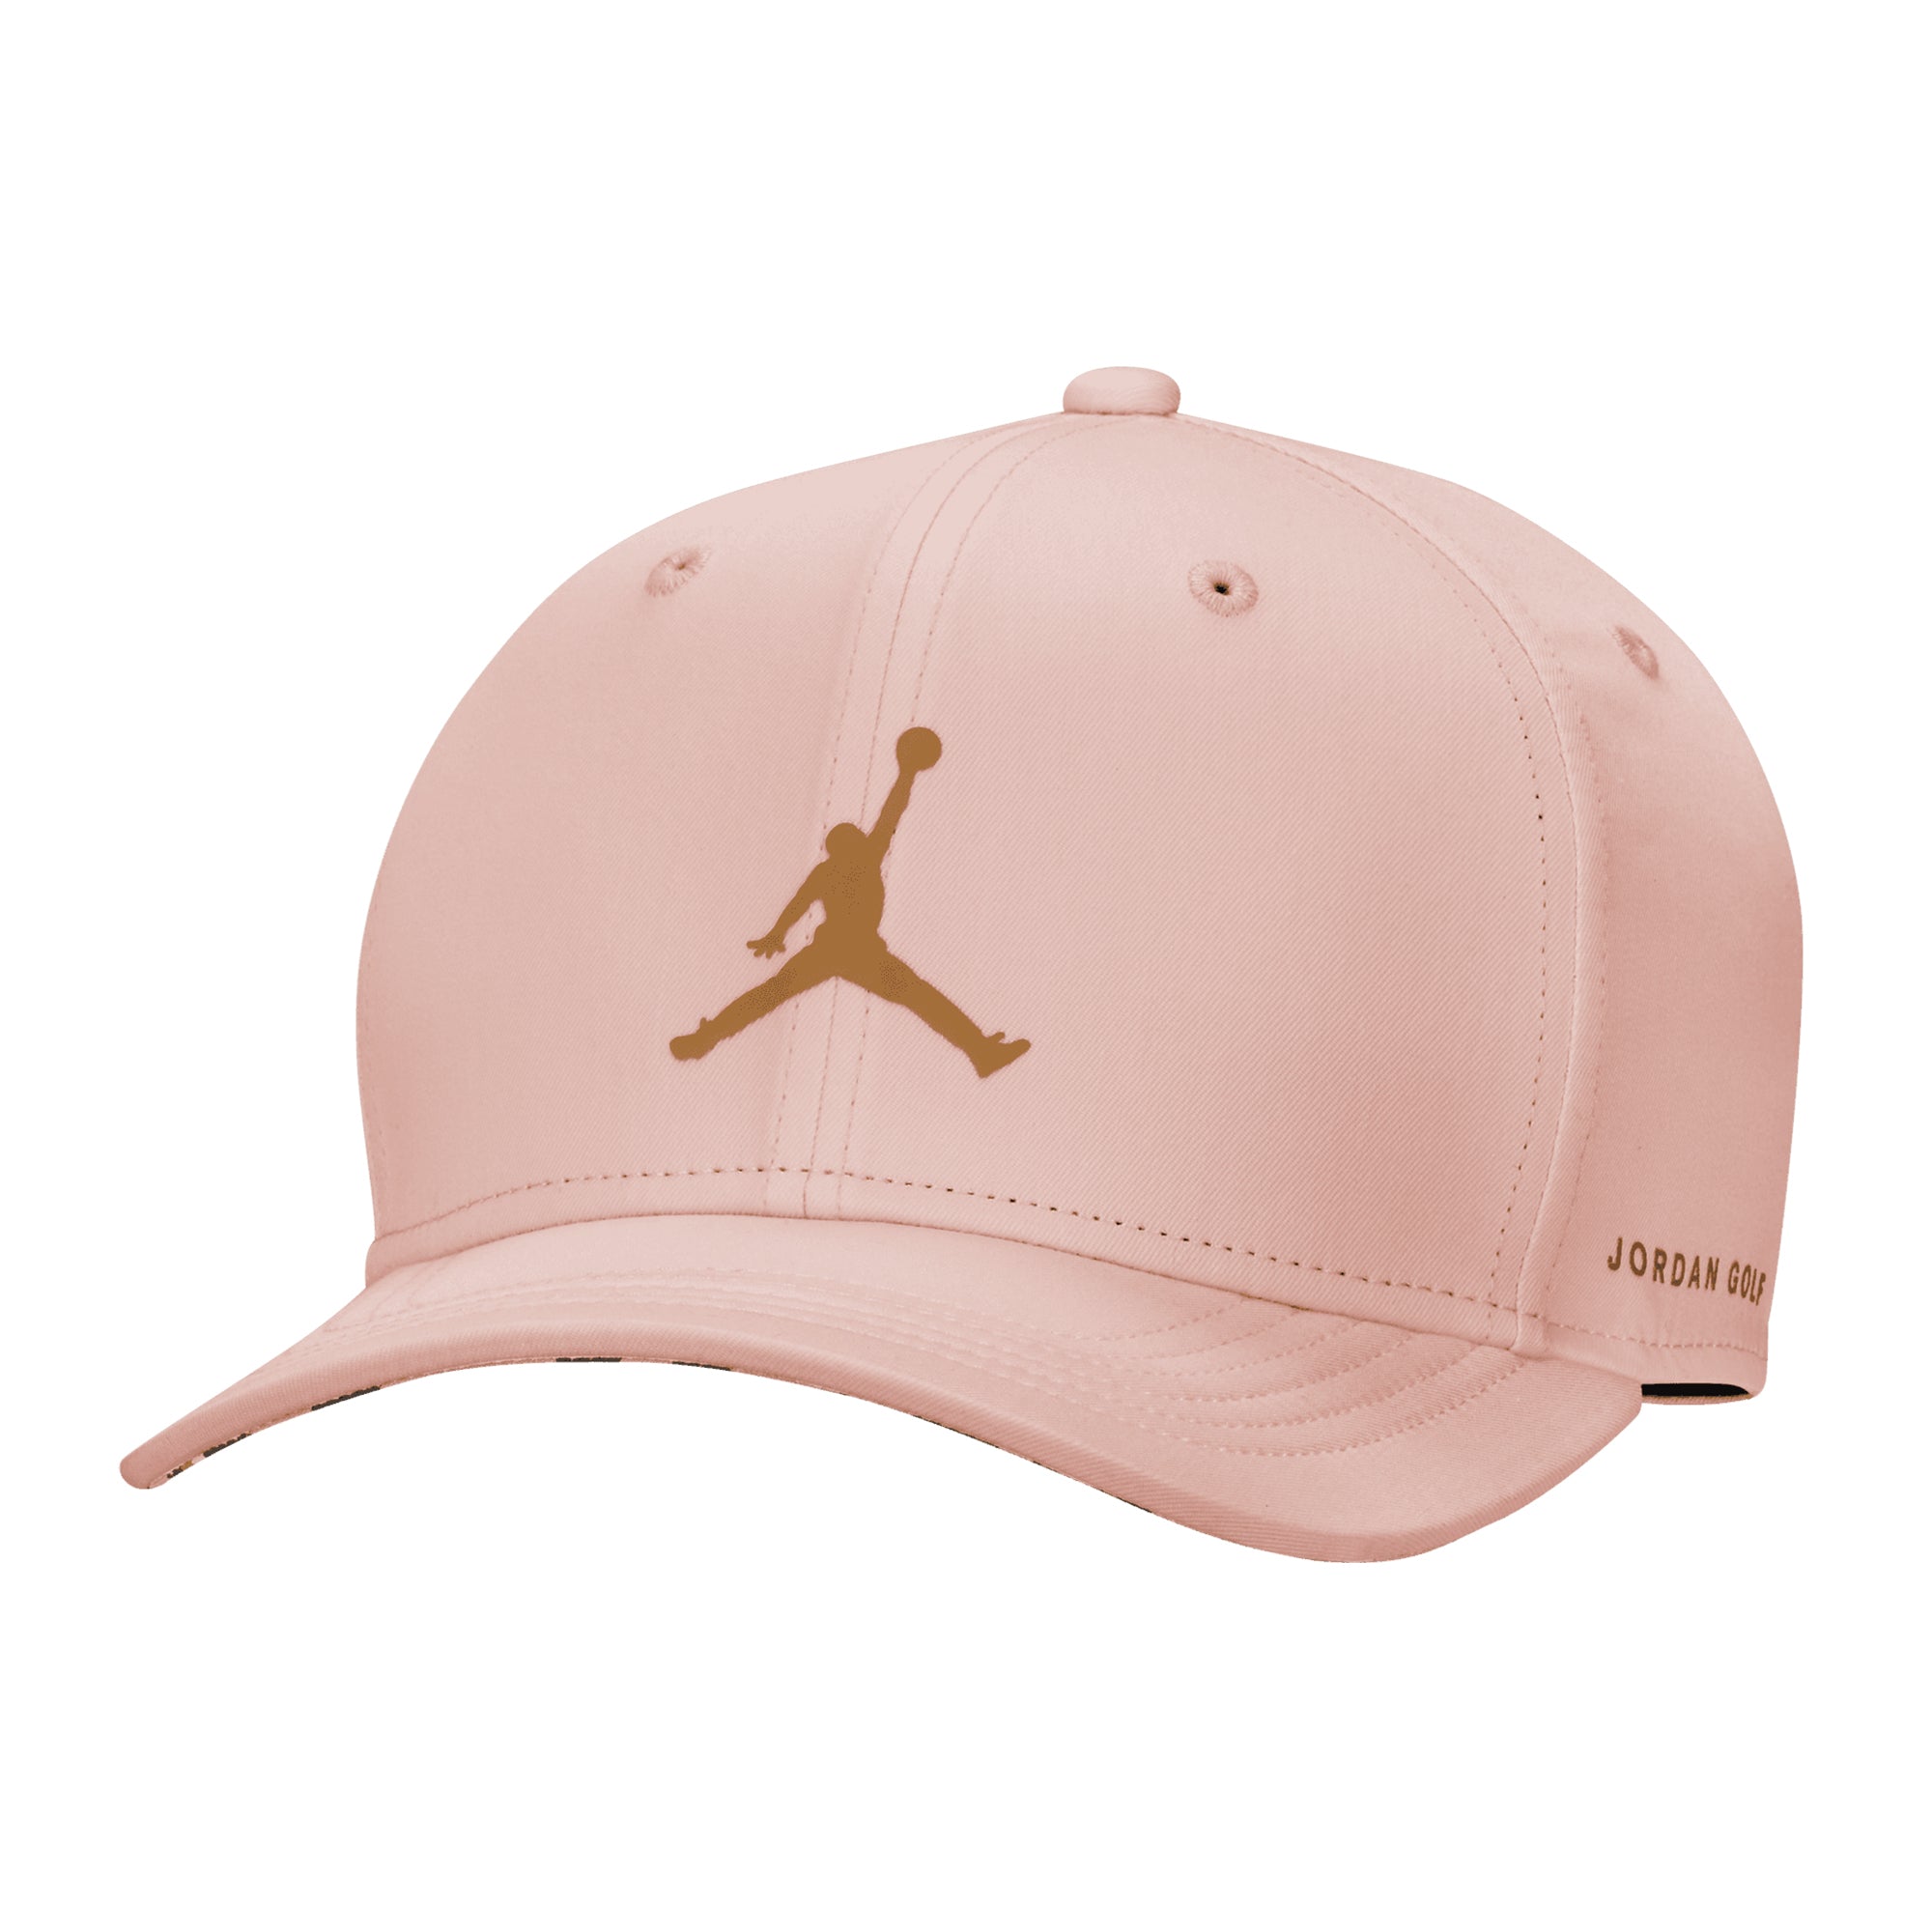 nike-jordan-rise-snapback-golf-cap-fv6295-622-legend-pink